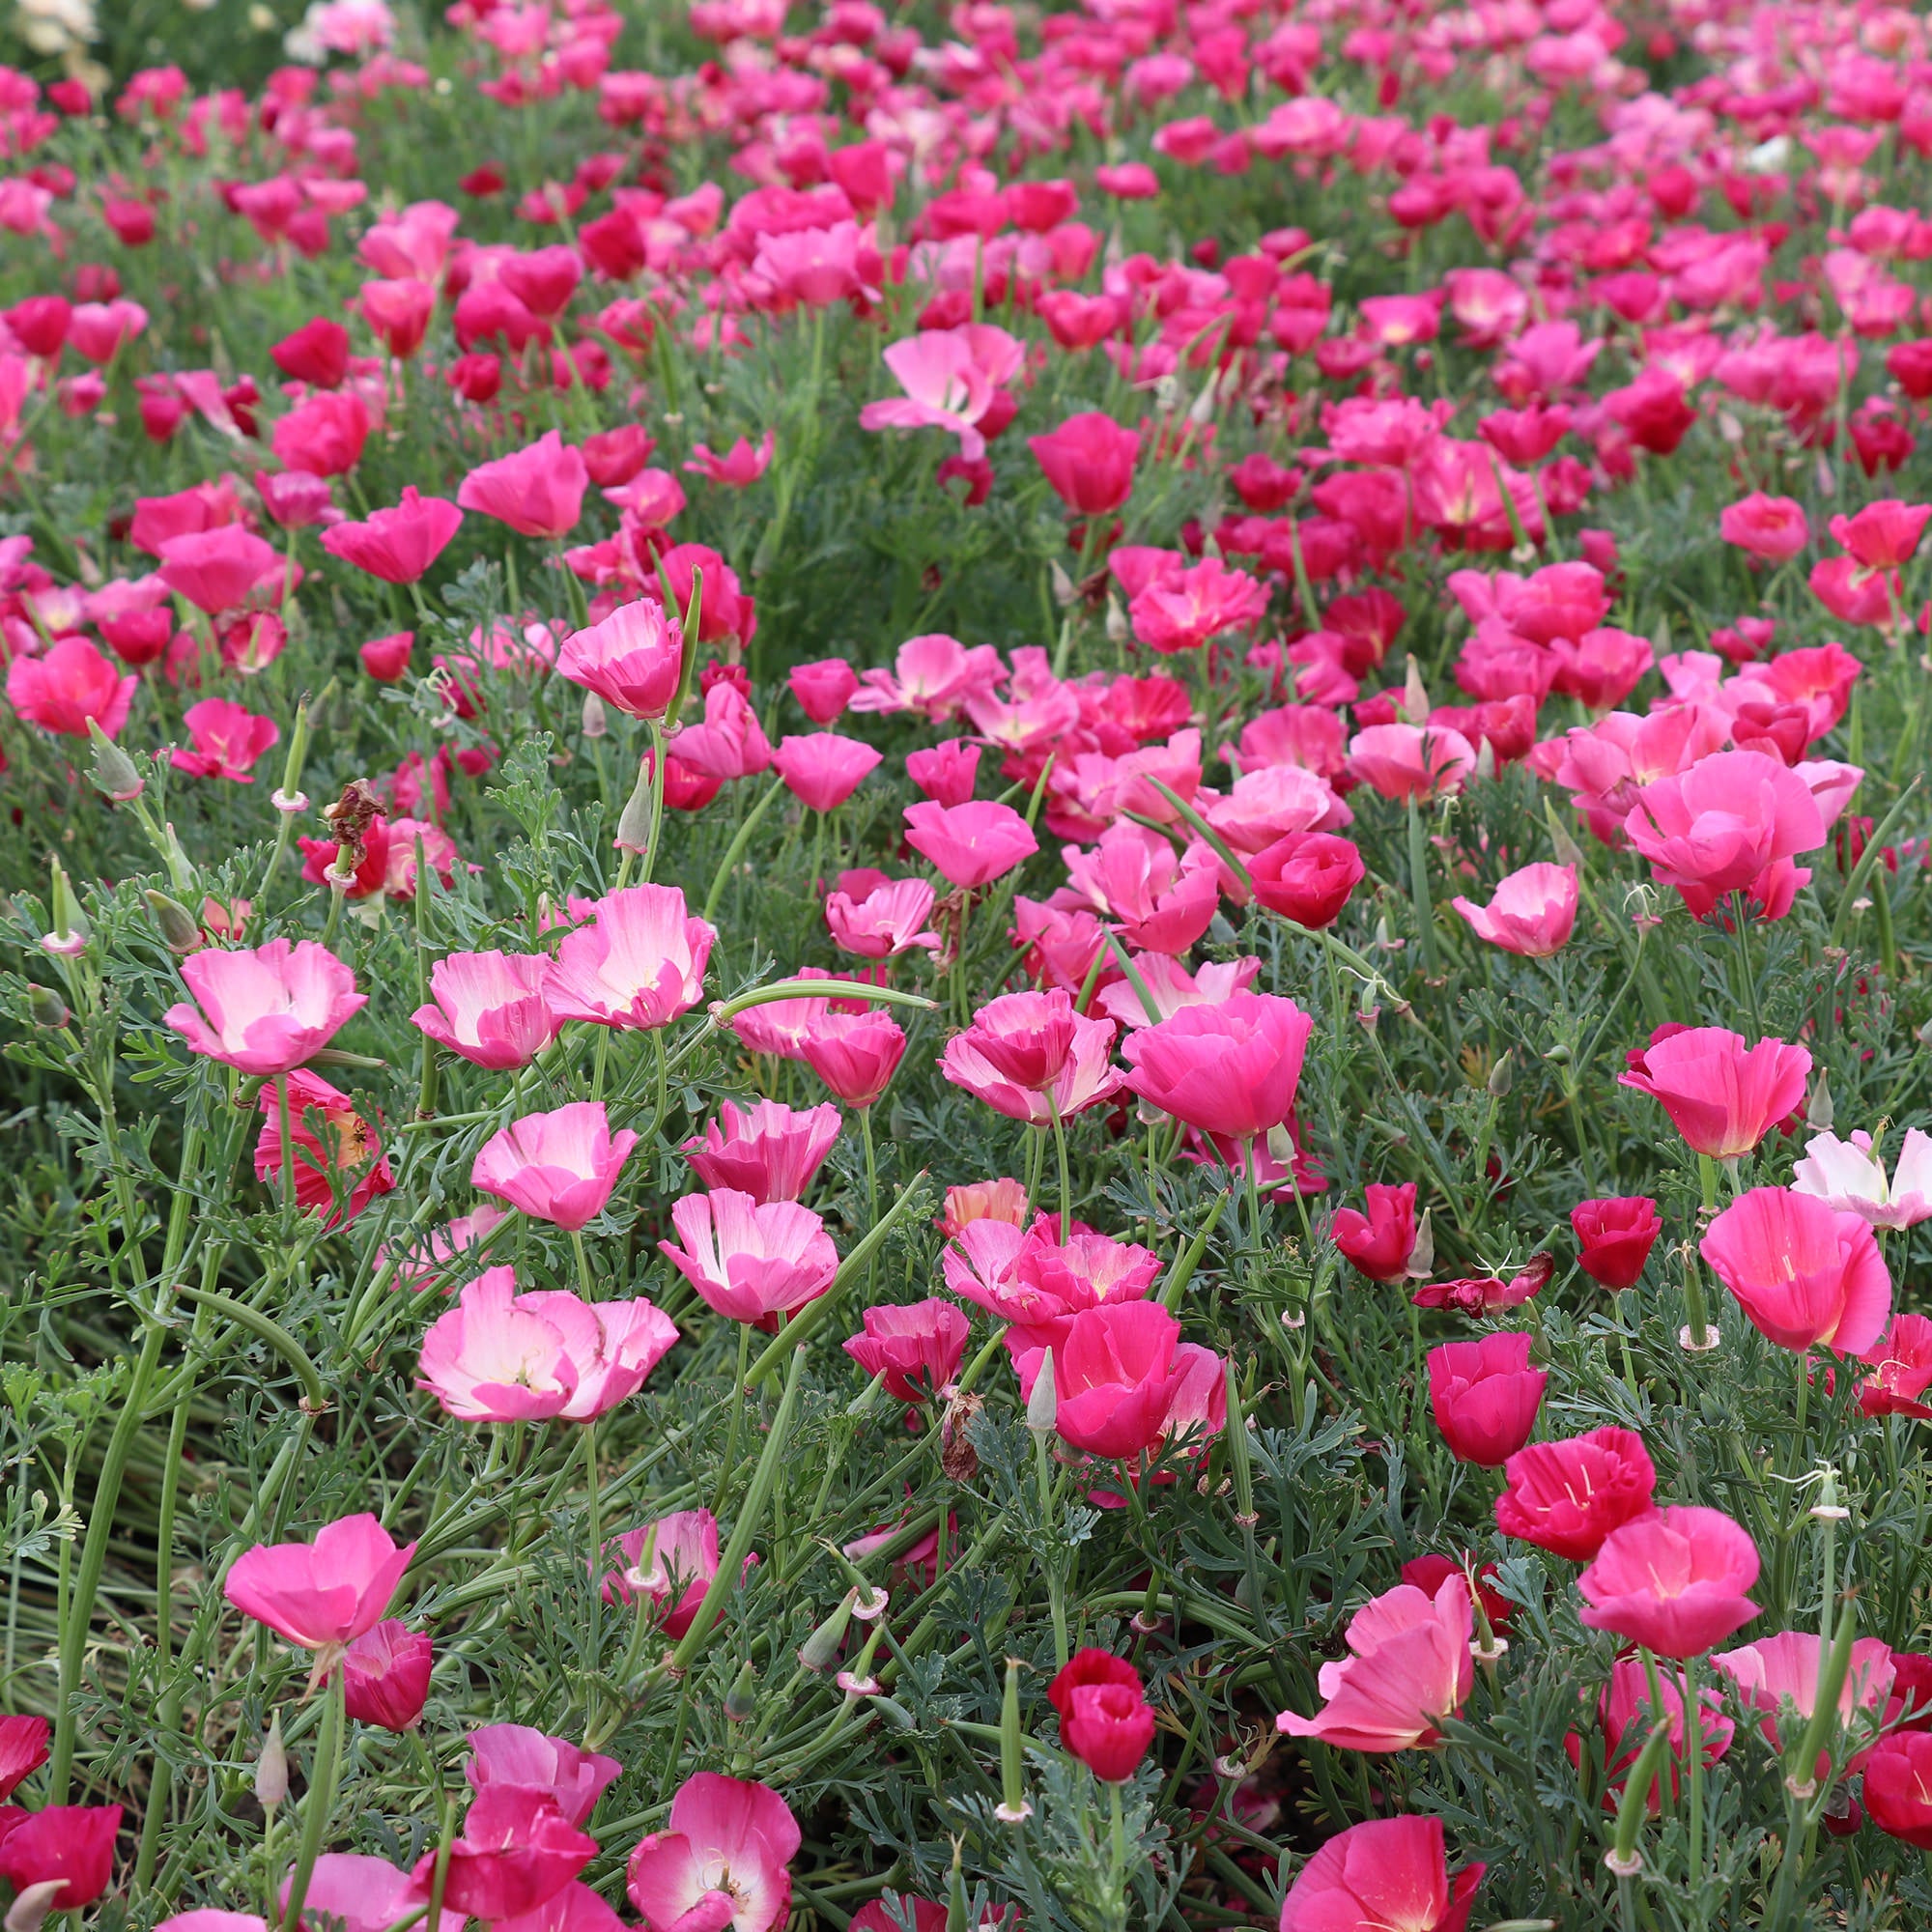 pink poppy flowers